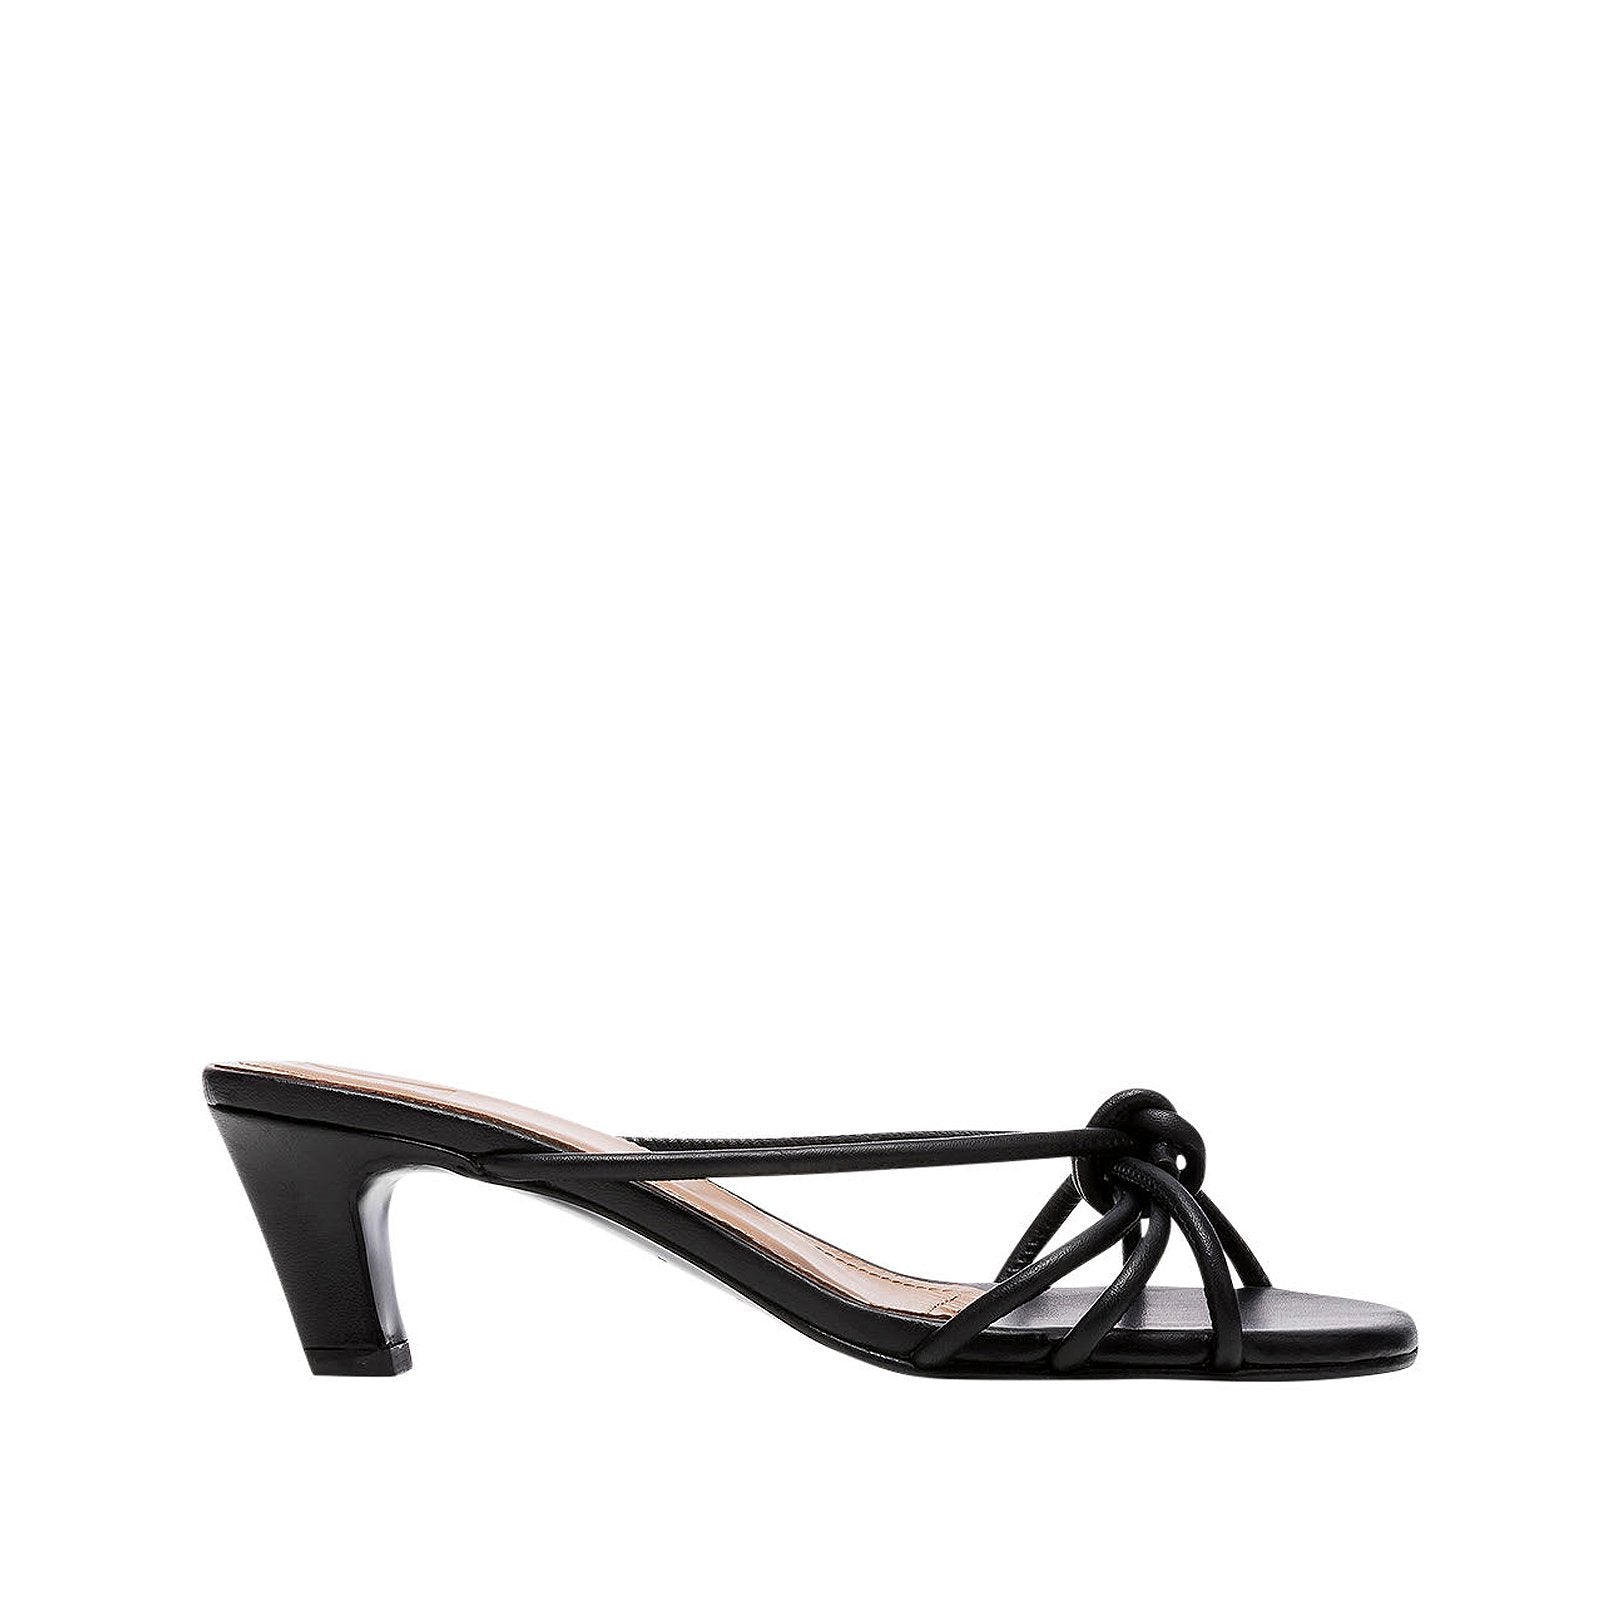 Eunice Leather Black Heeled Sandals 20010411301-001 - 1